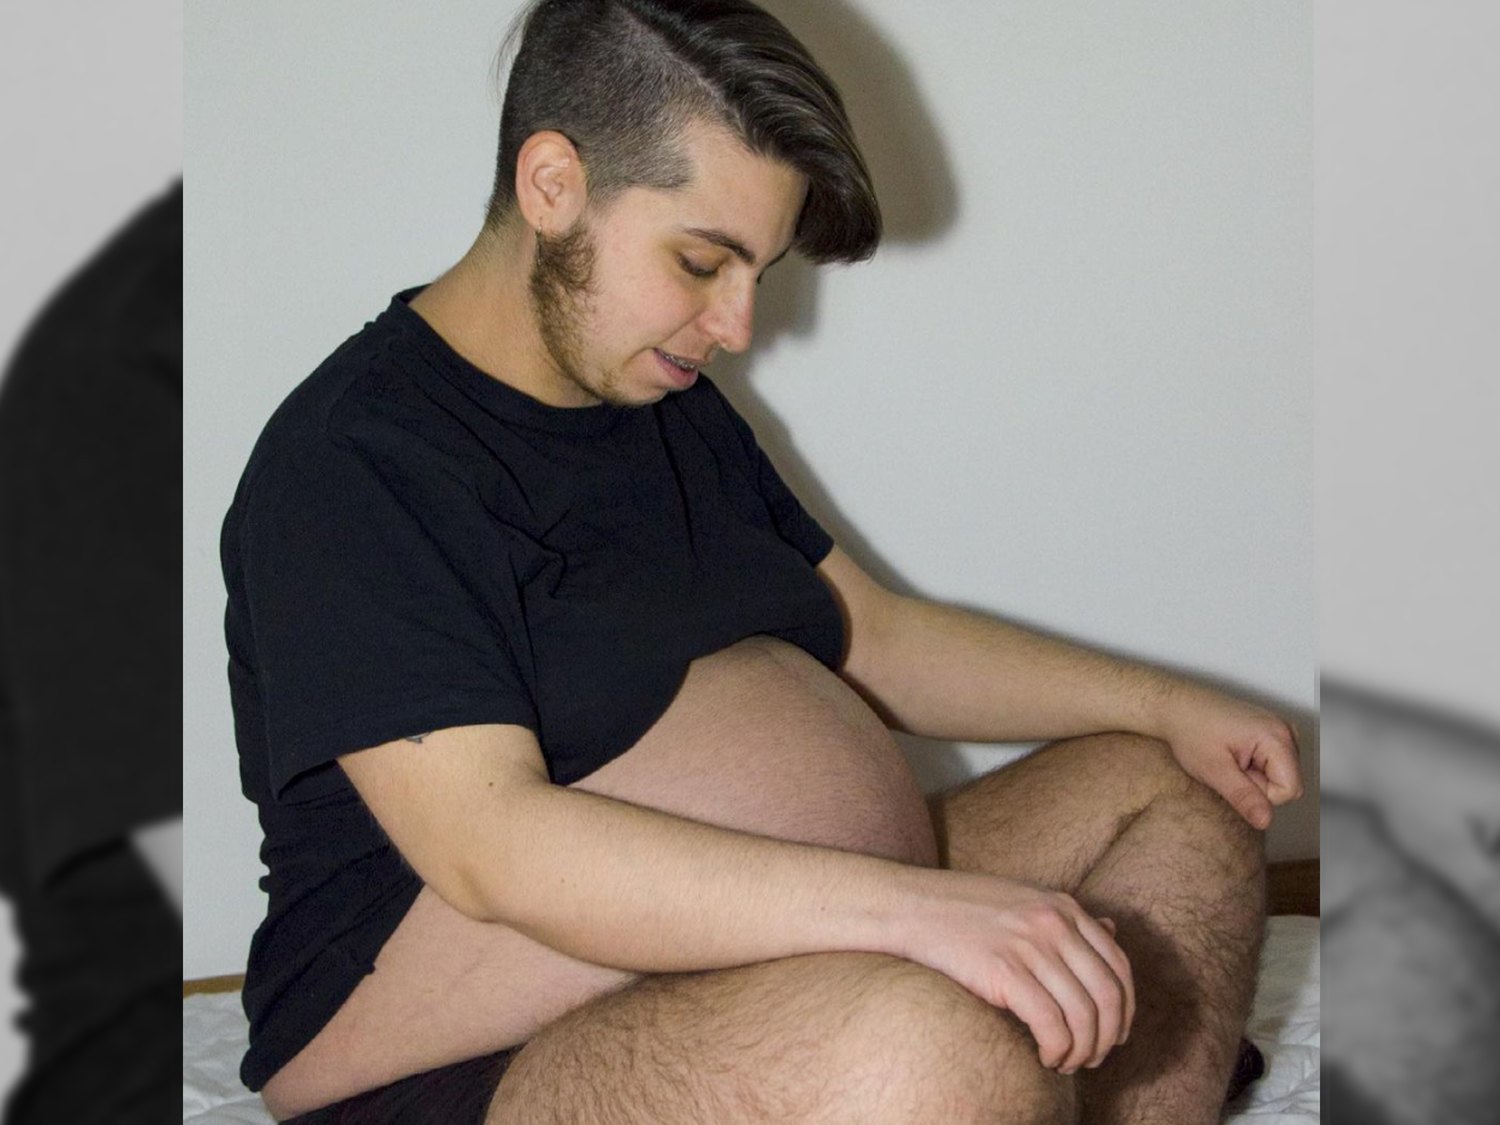 Rubén Castro, hombre trans embarazado, da a luz a su hije Luar